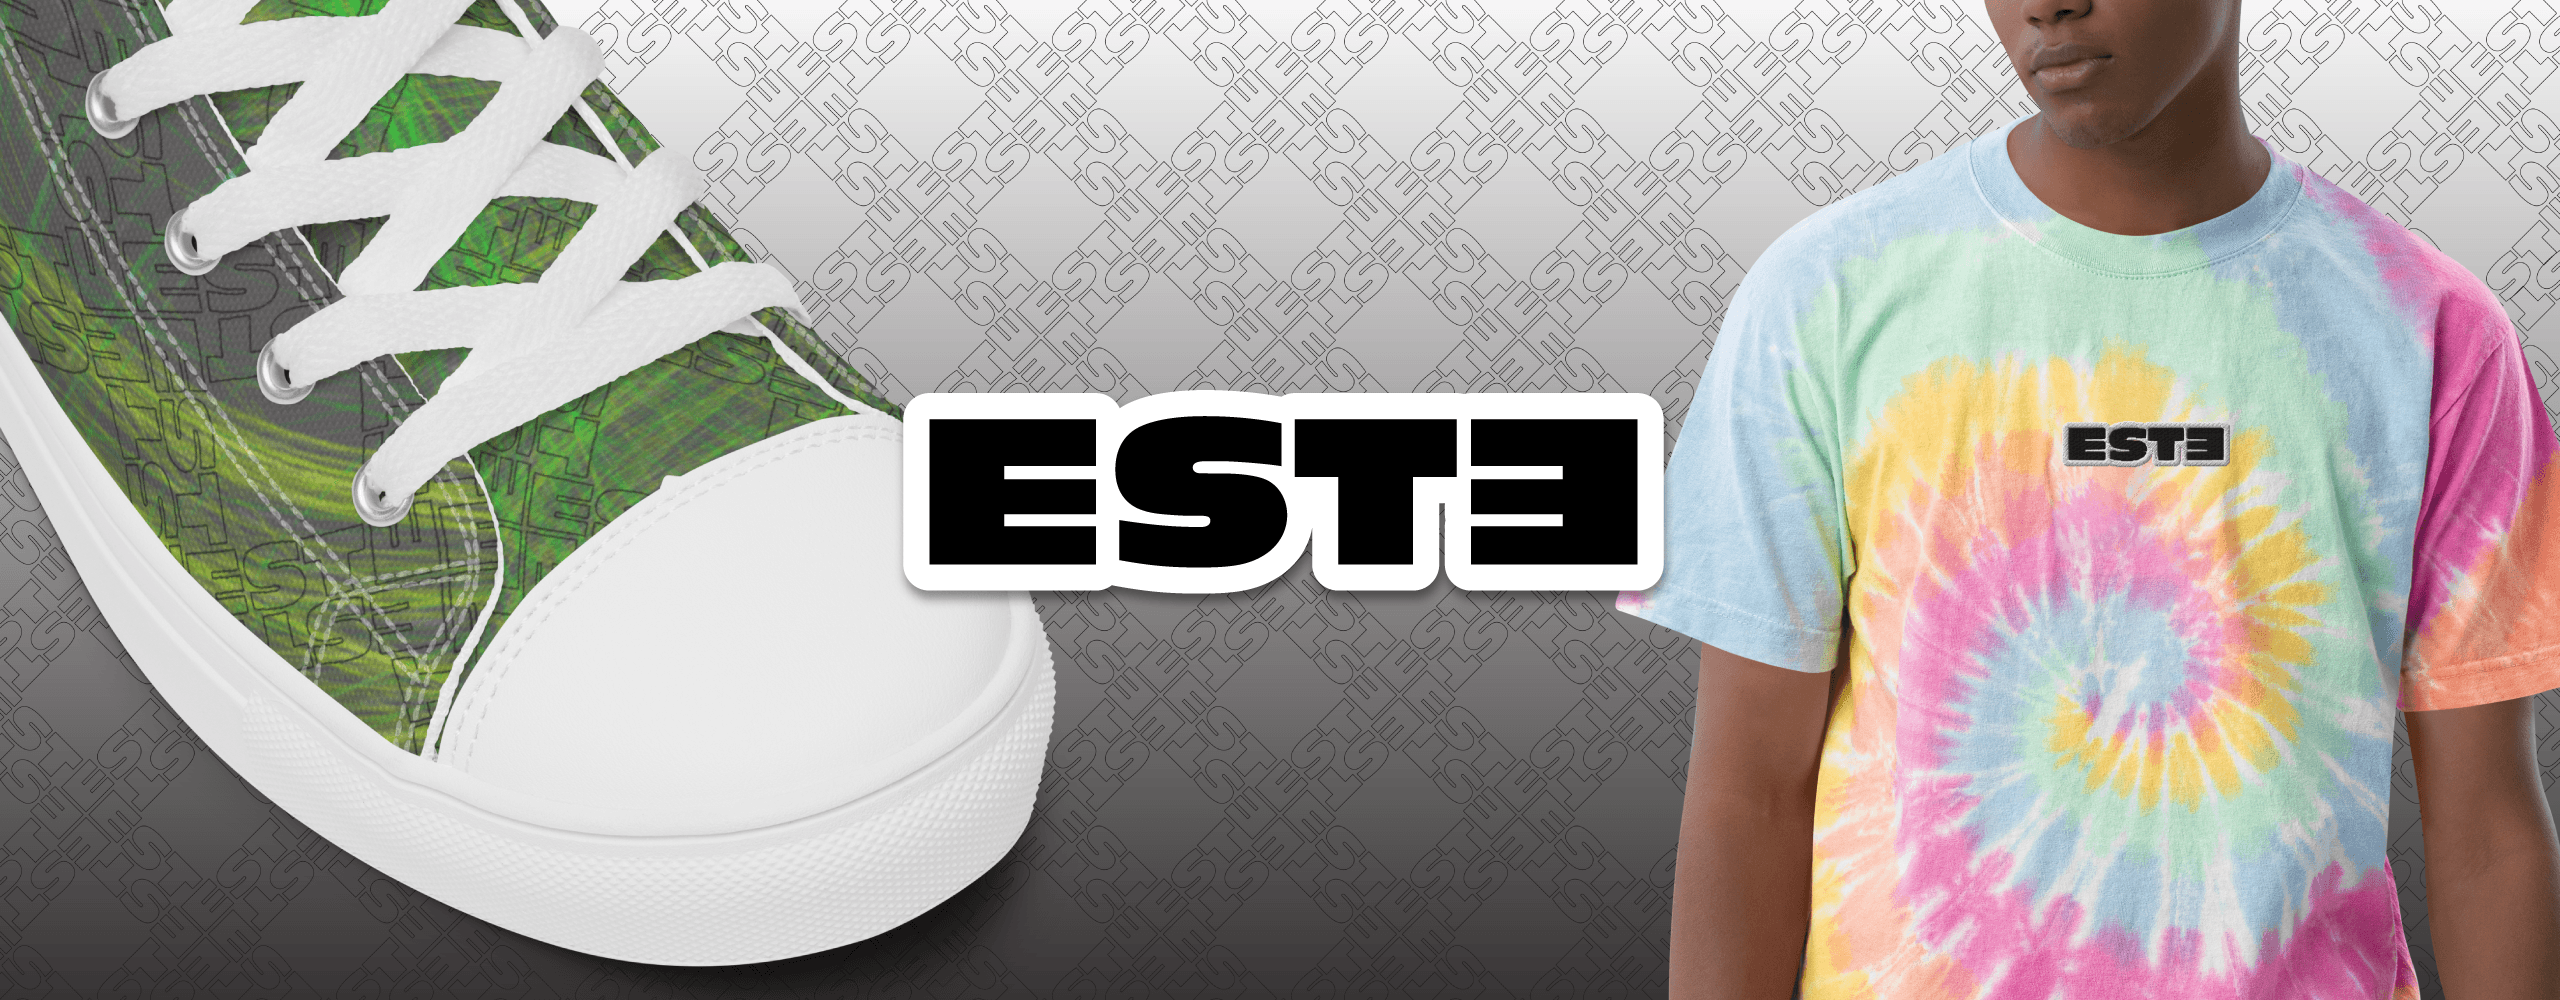 ESTE-global 横幅